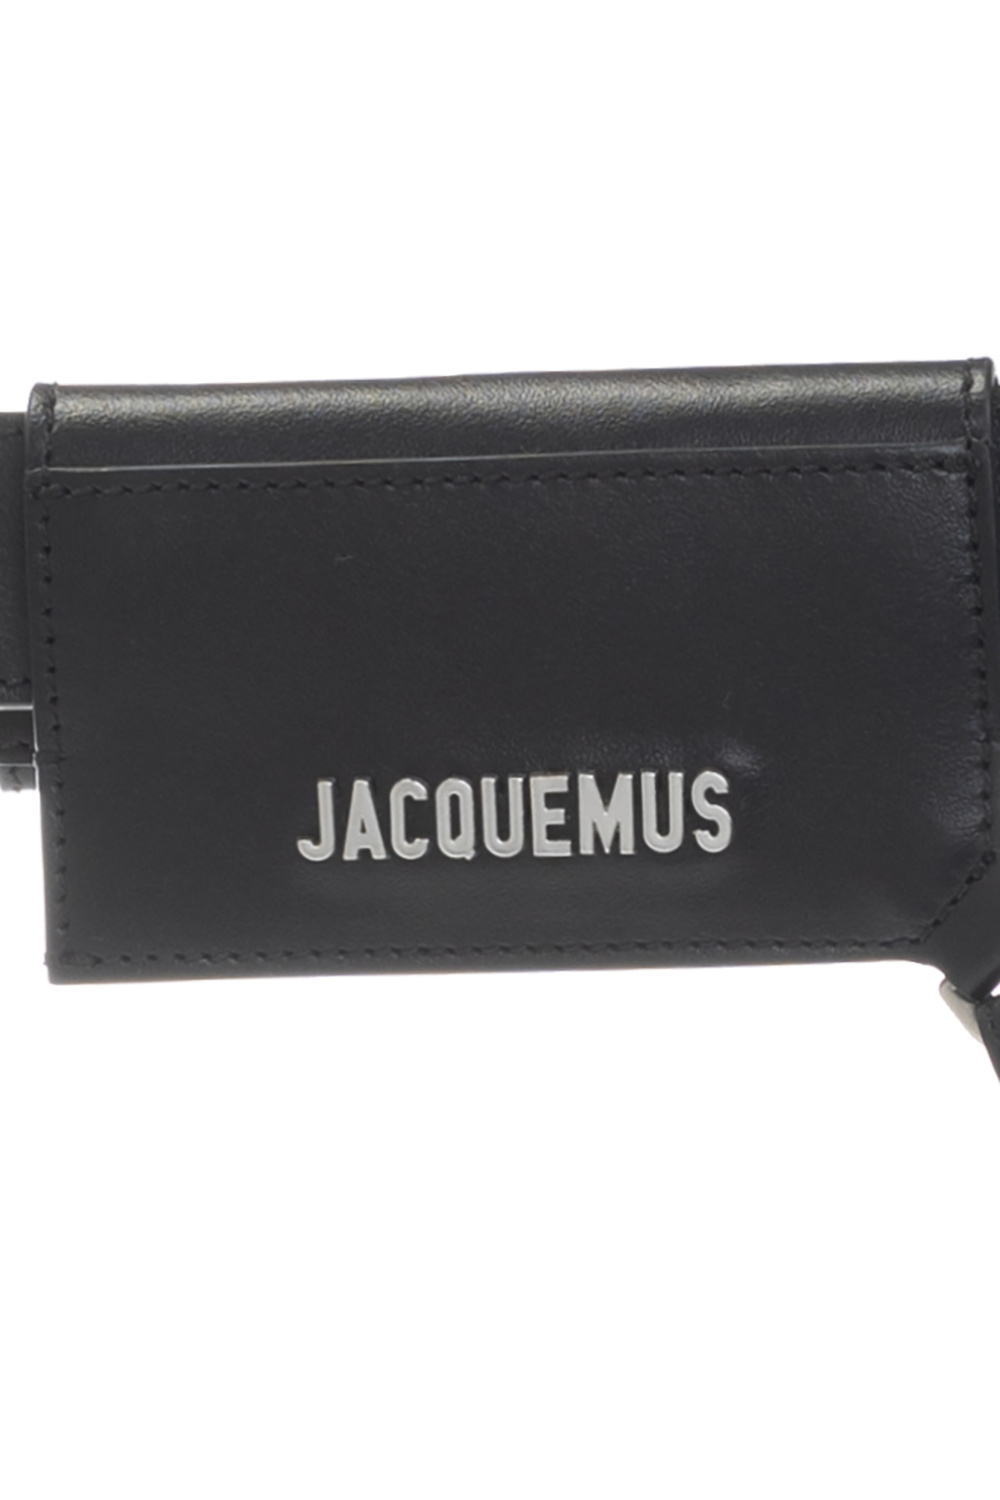 Jacquemus Ties / bows